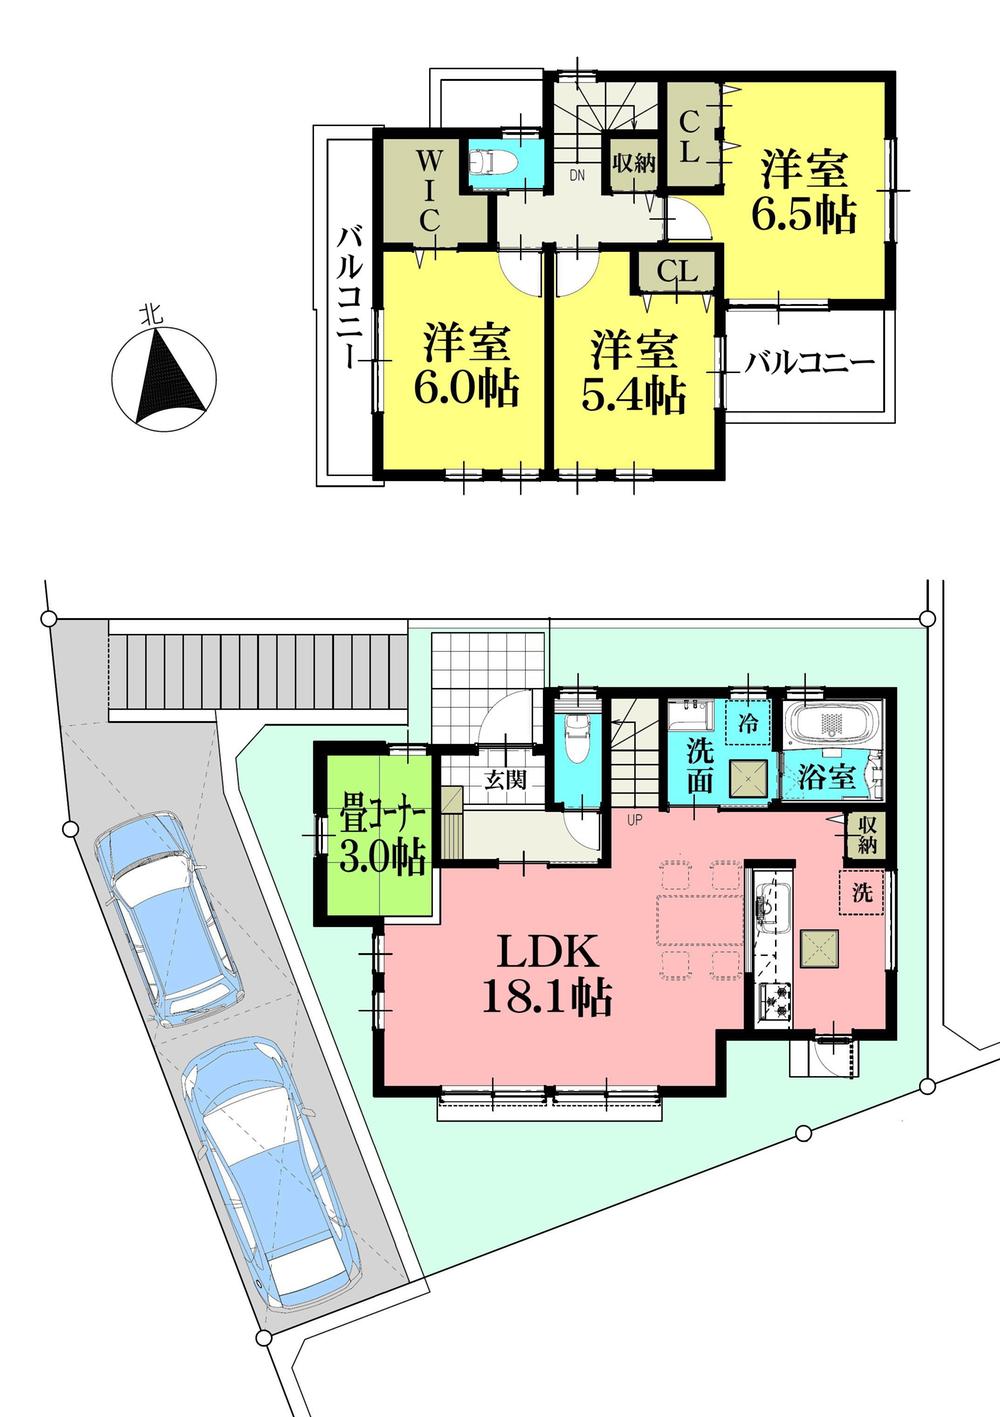 Compartment view + building plan example. Kaneman until KATAKURA shop 240m